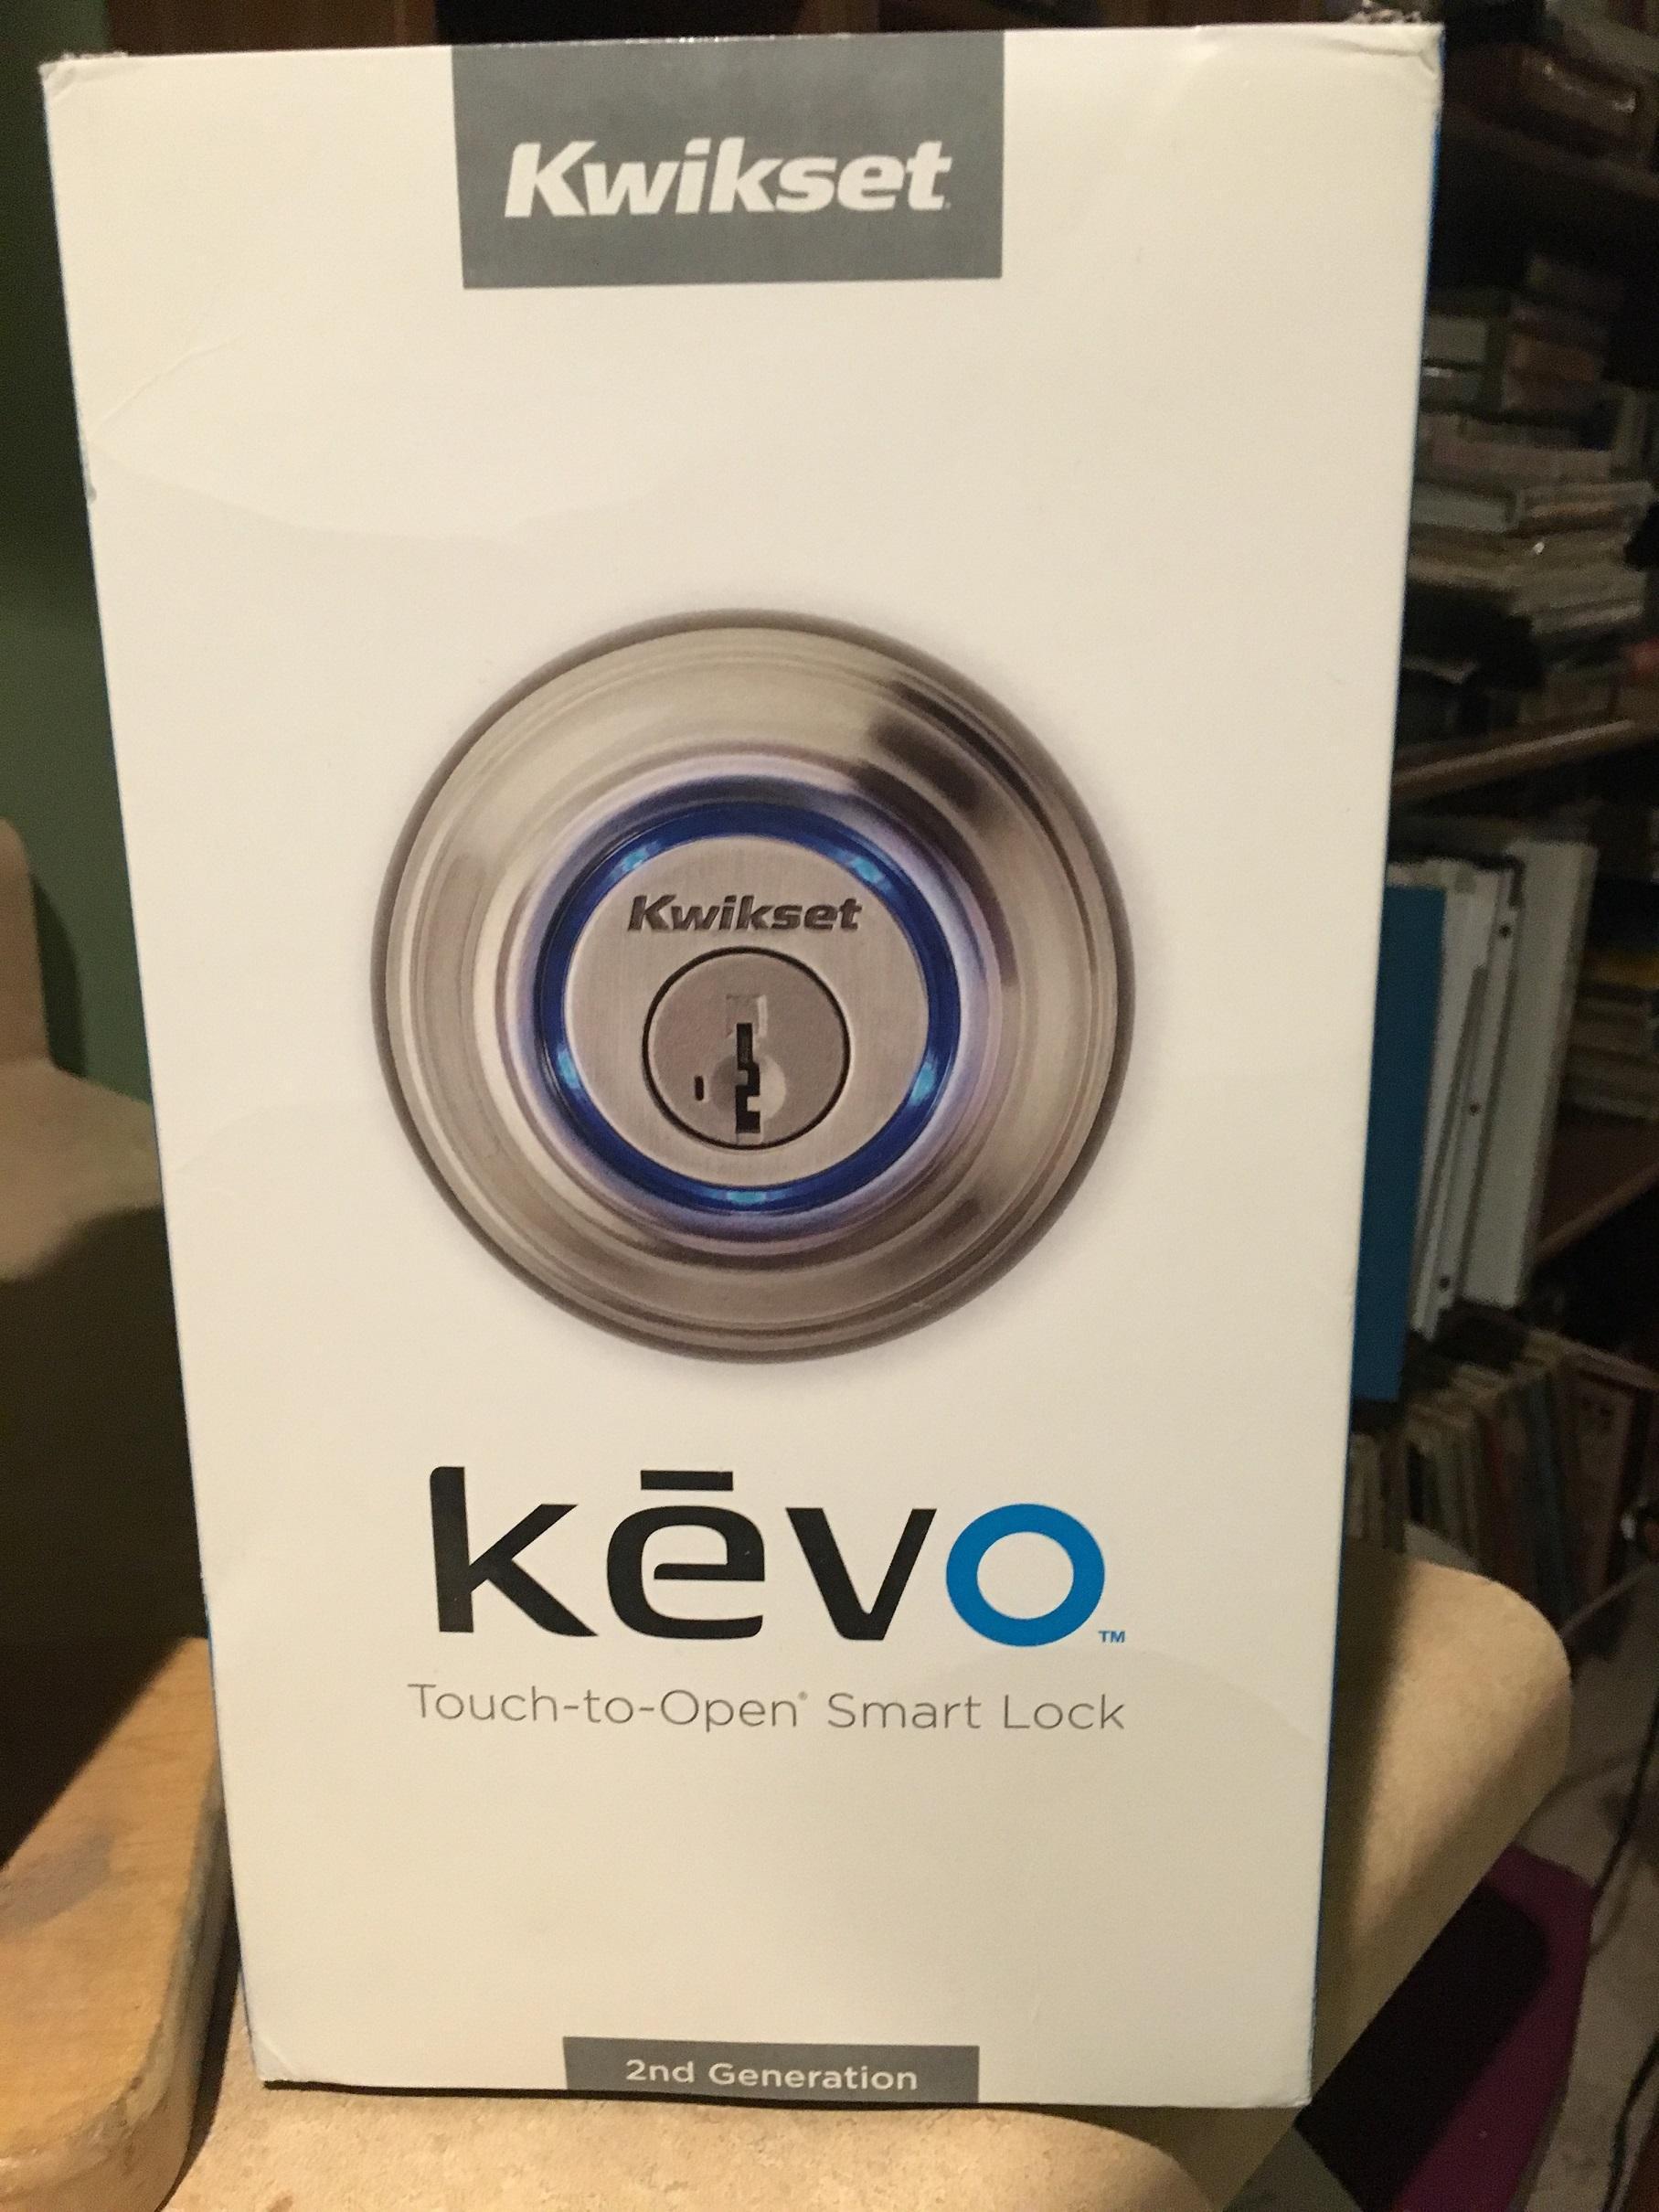 Installing Kevo Smart Lock